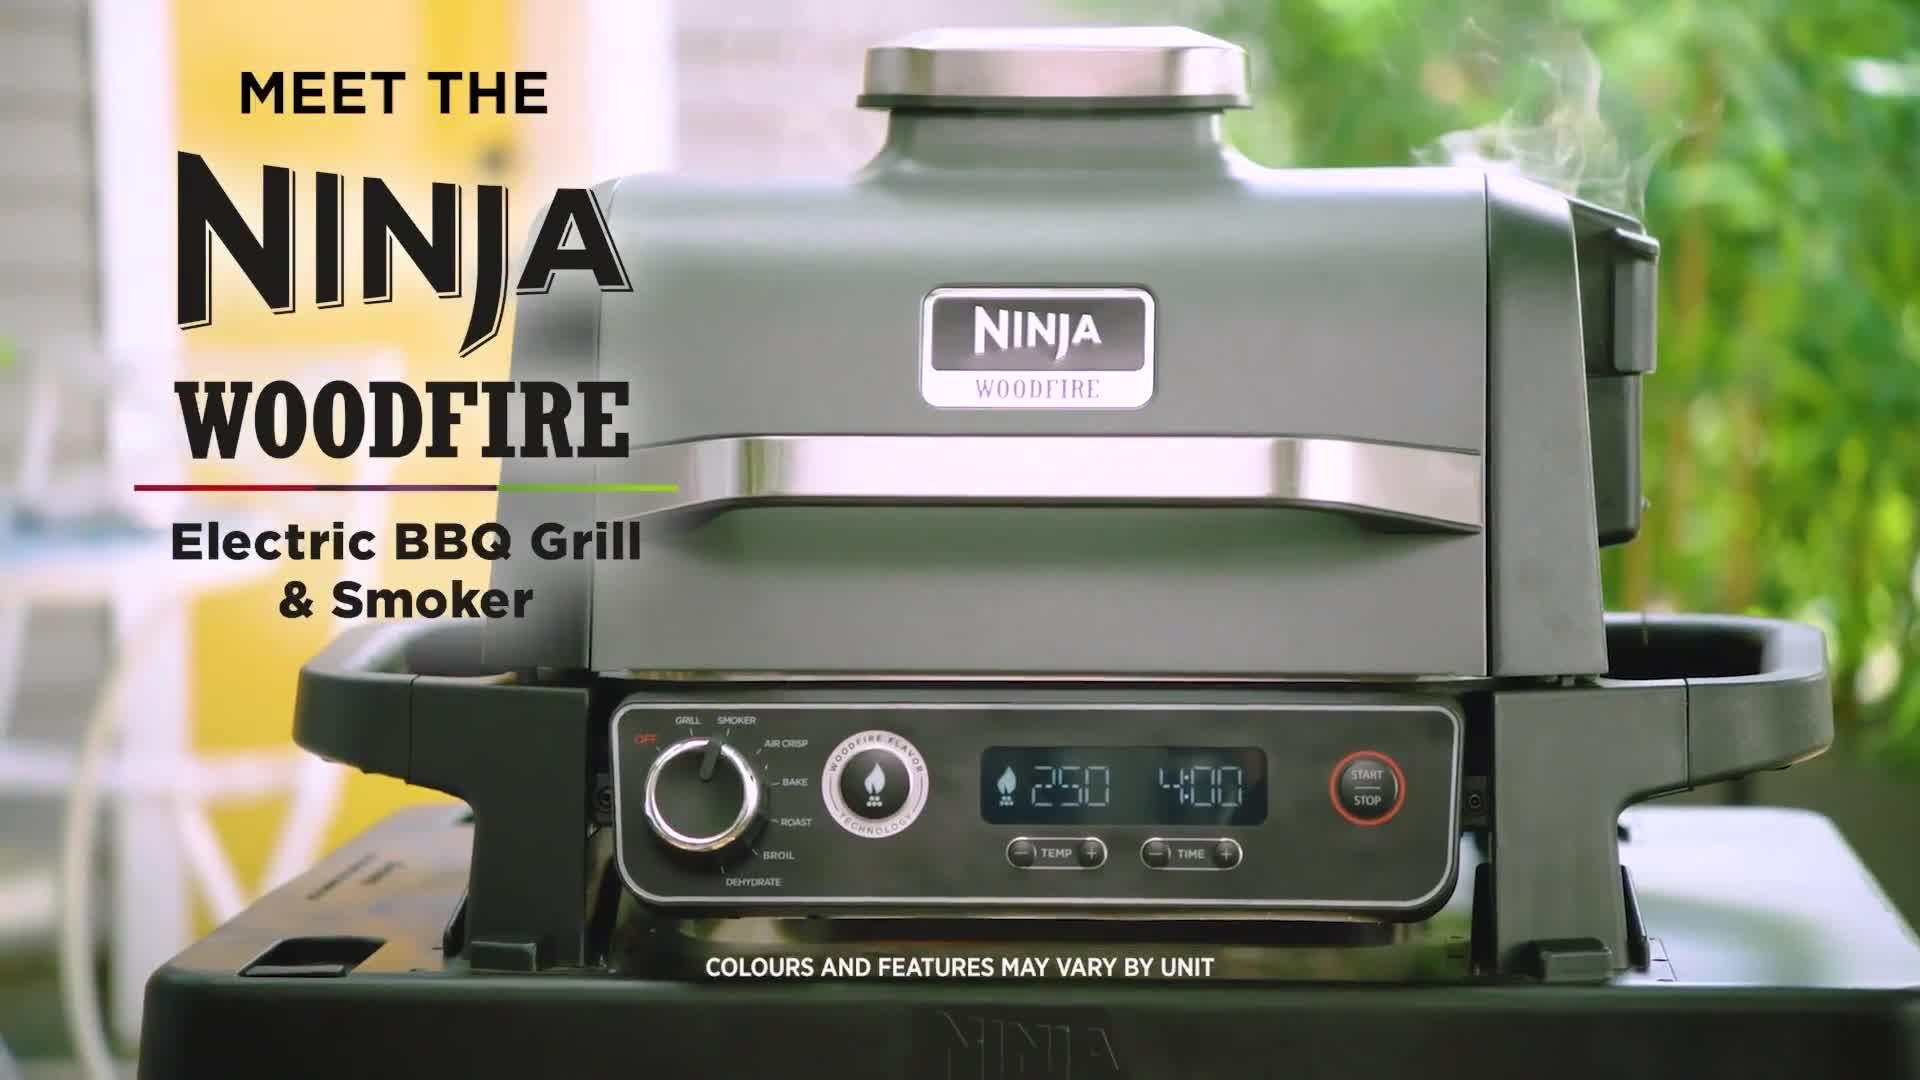 VoucherCodes on X: Fancy winning the new 10.4L Ninja Air Fryer in